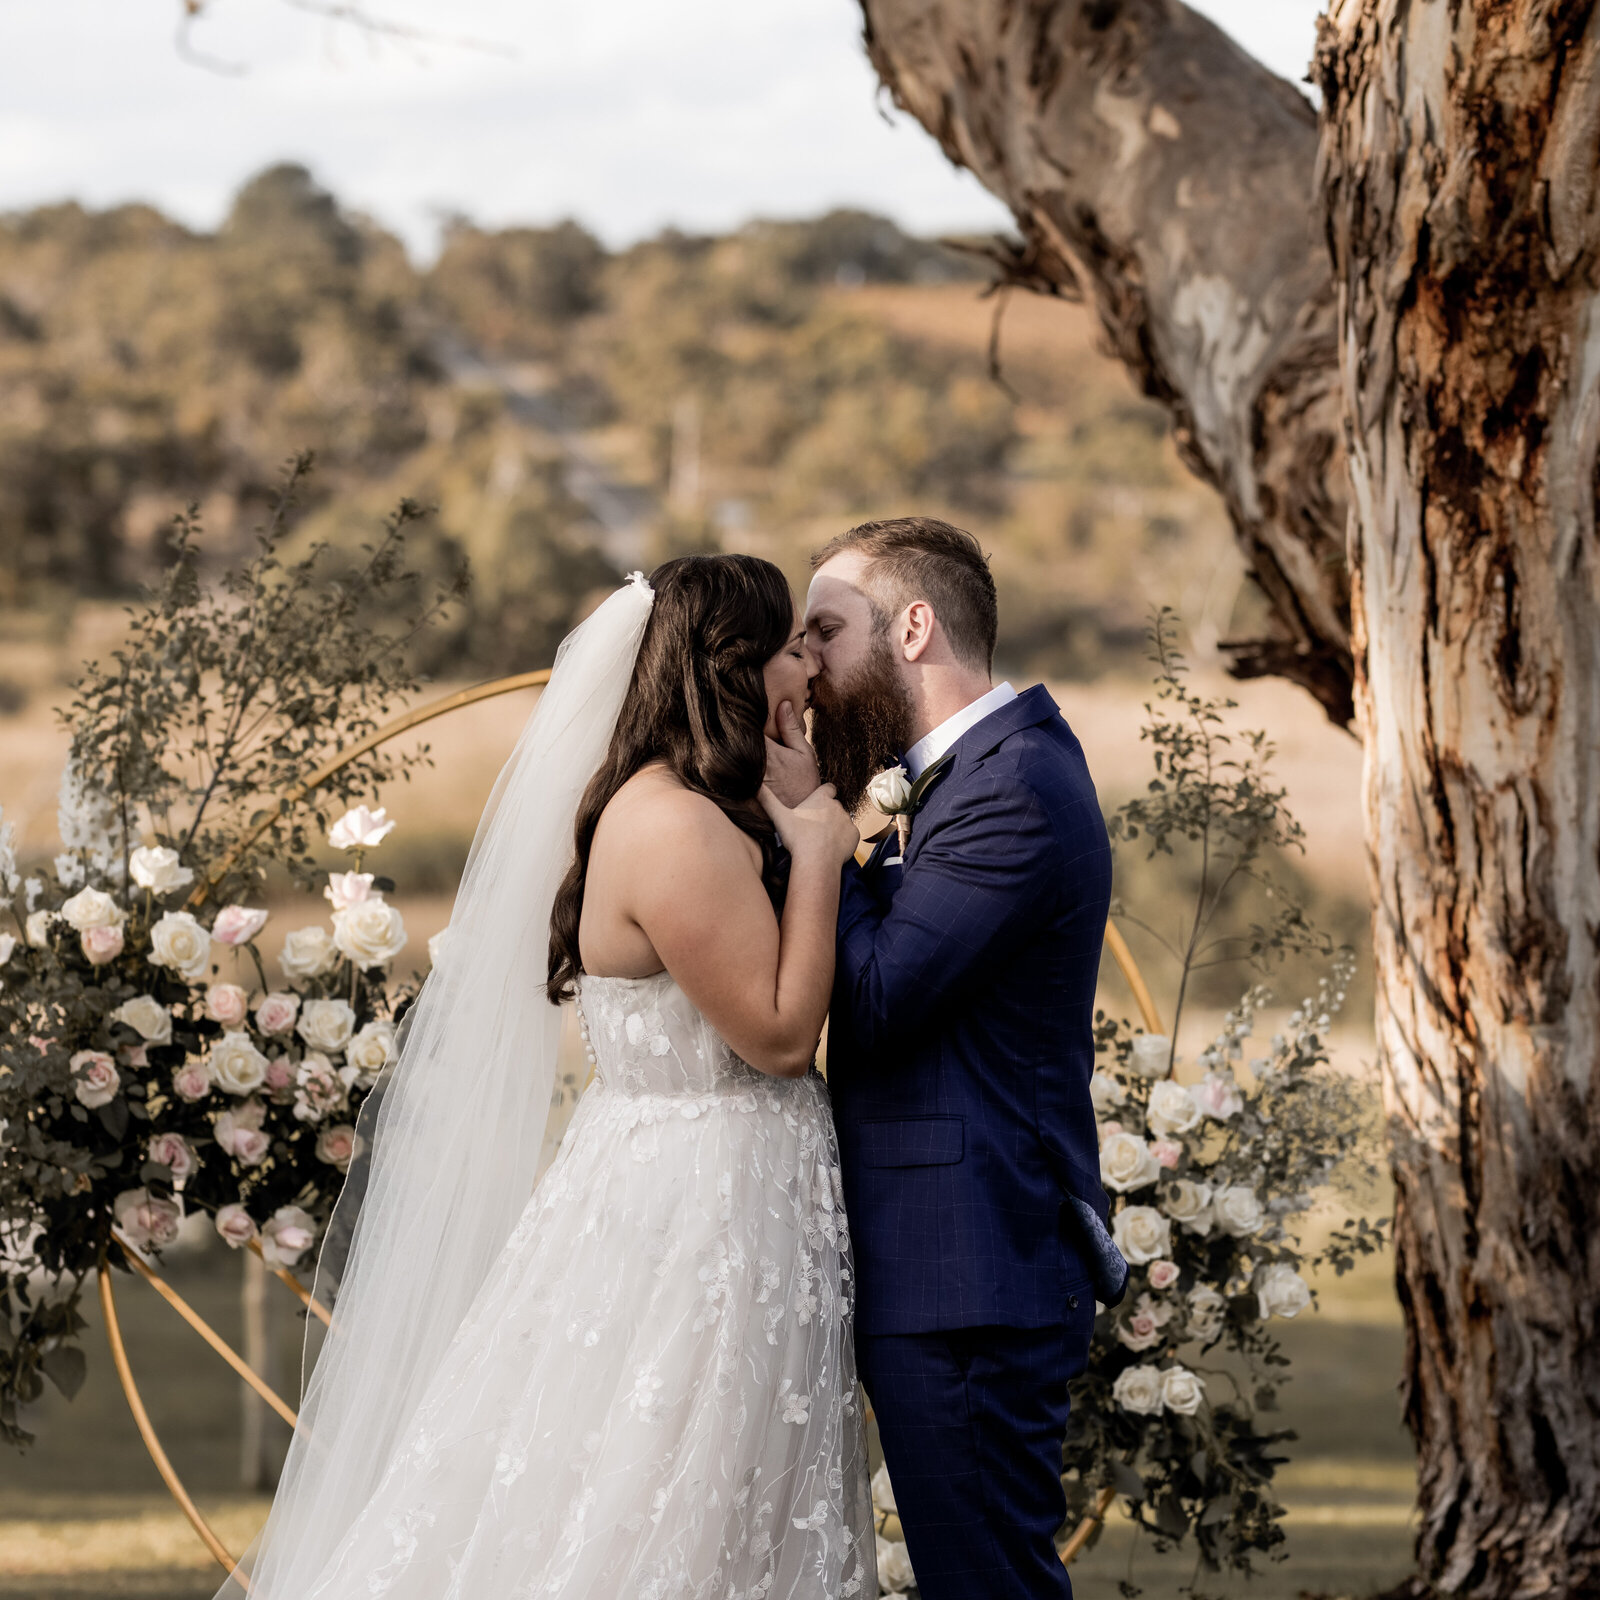 Jazmyn-Thomas-Rexvil-Photography-Adelaide-Wedding-Photographer-300